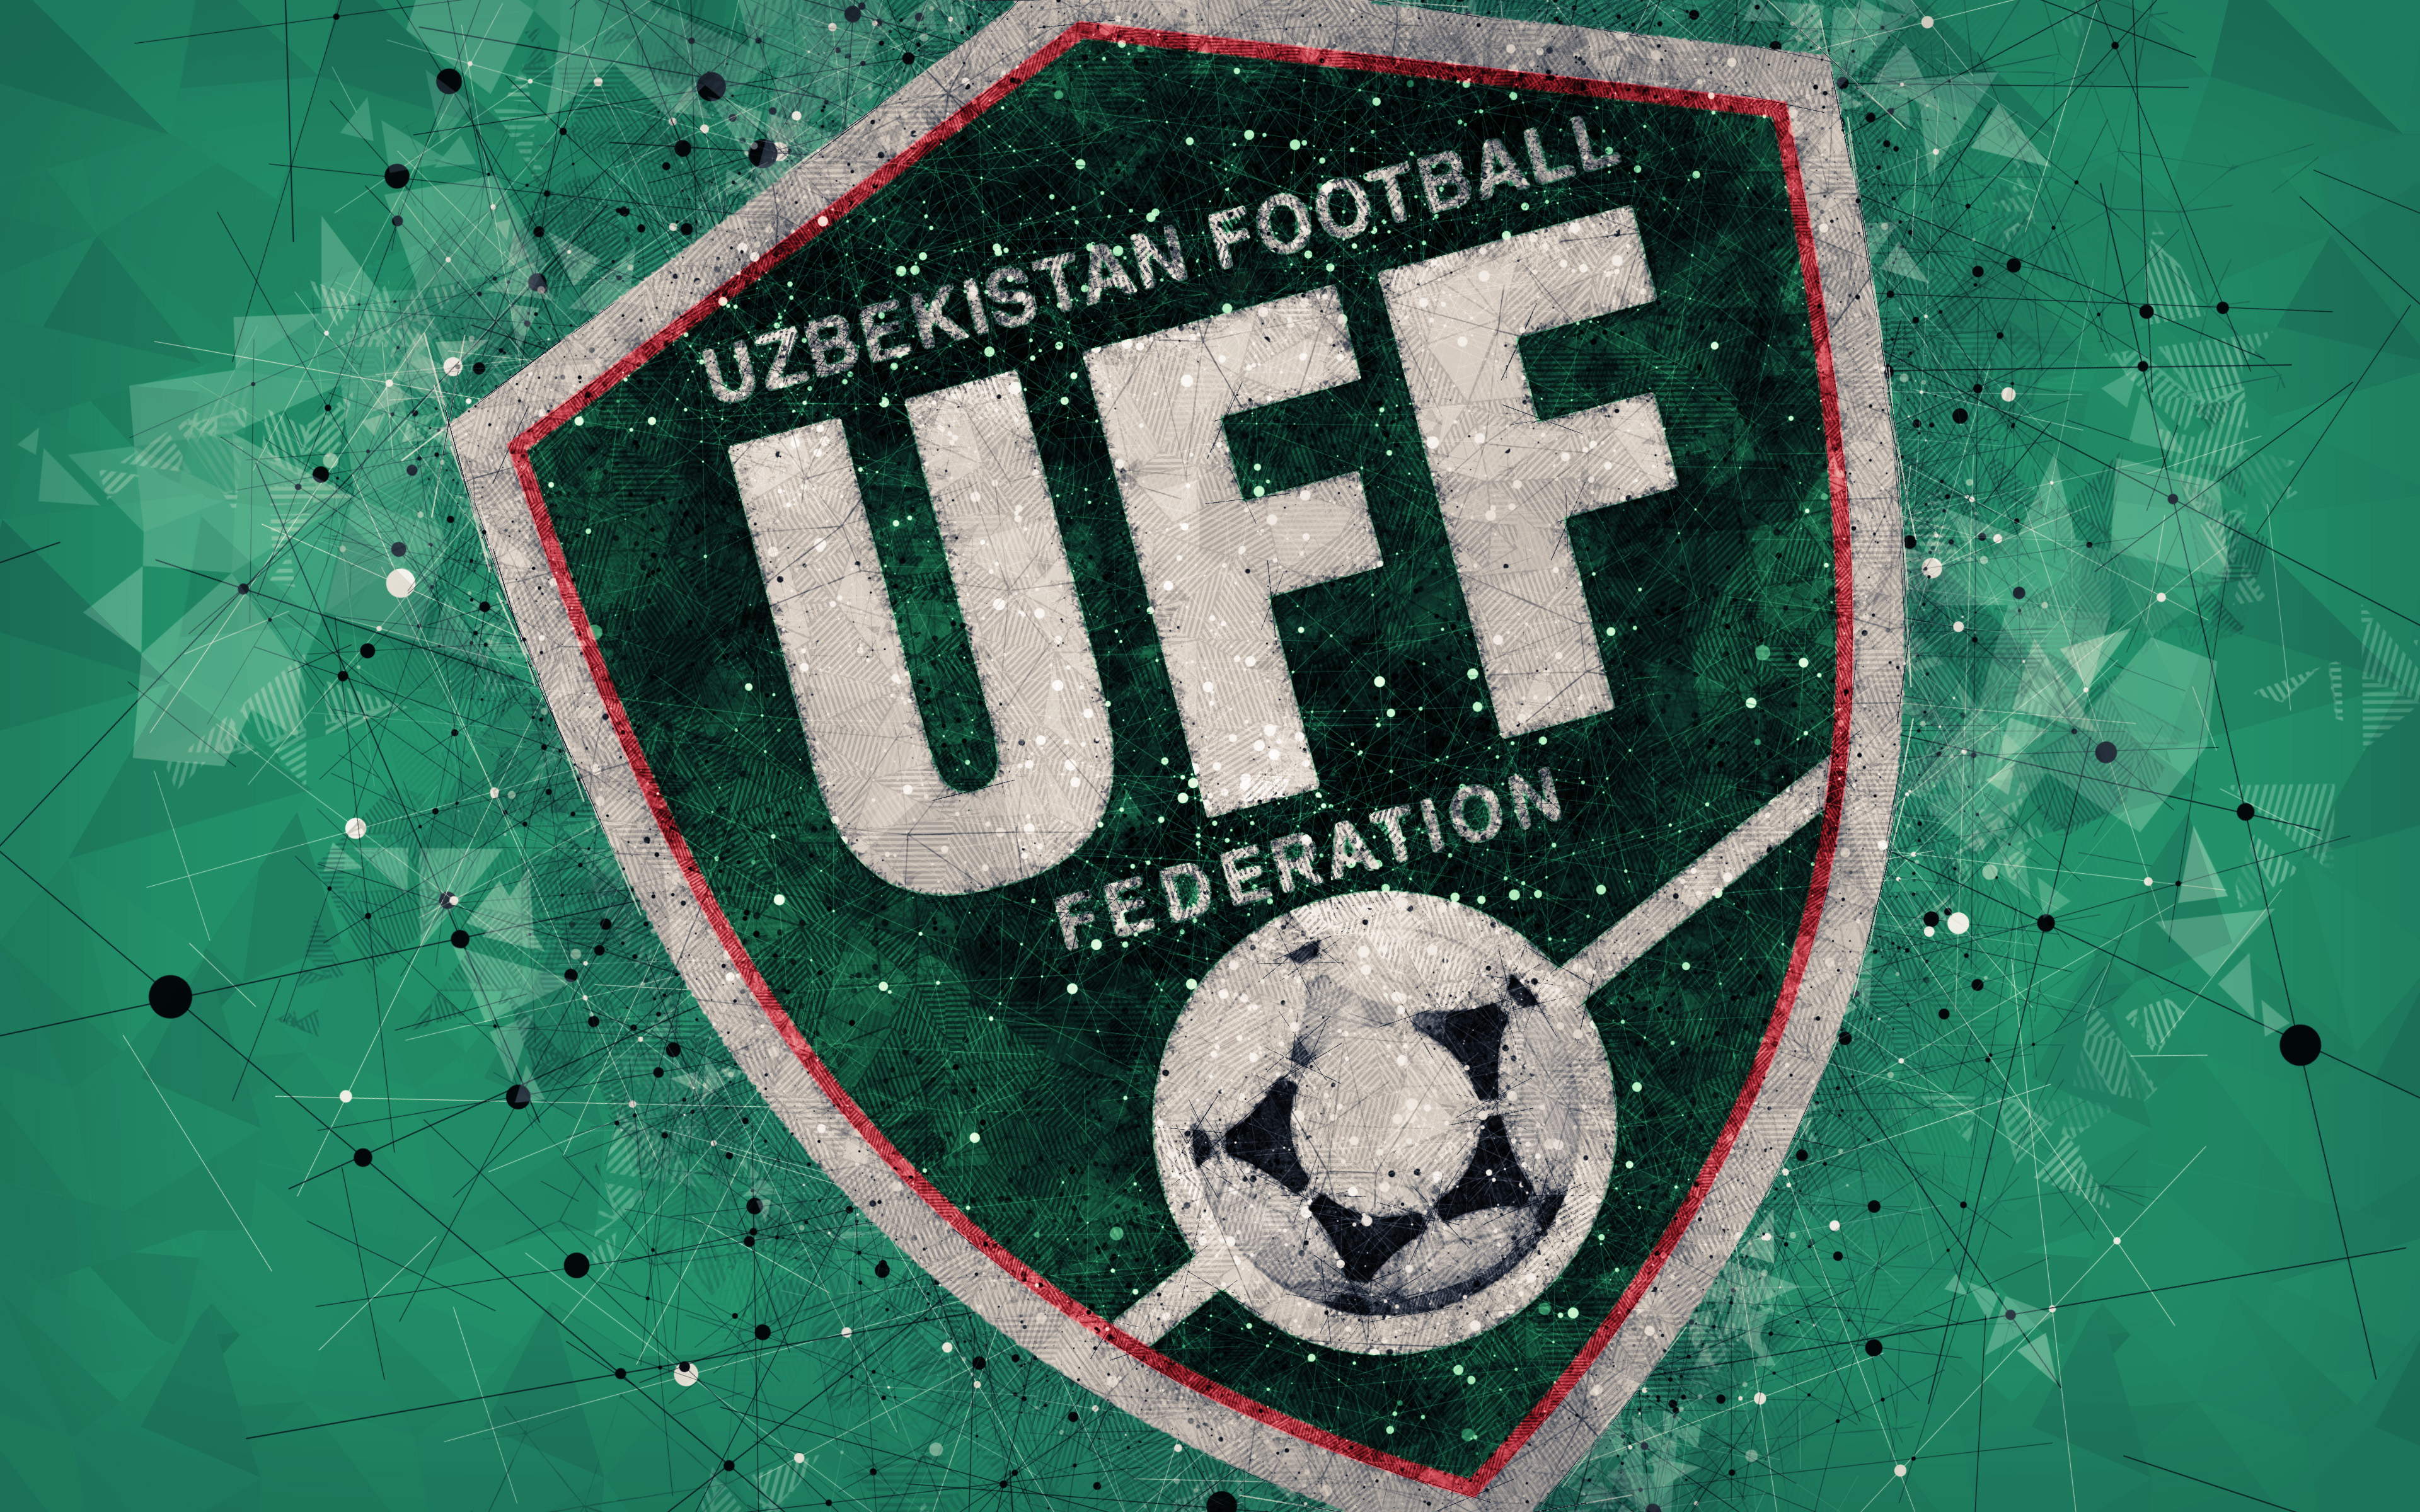 Descarga gratis la imagen Fútbol, Logo, Emblema, Deporte, Uzbekistán, Selección De Fútbol De Uzbekistán en el escritorio de tu PC